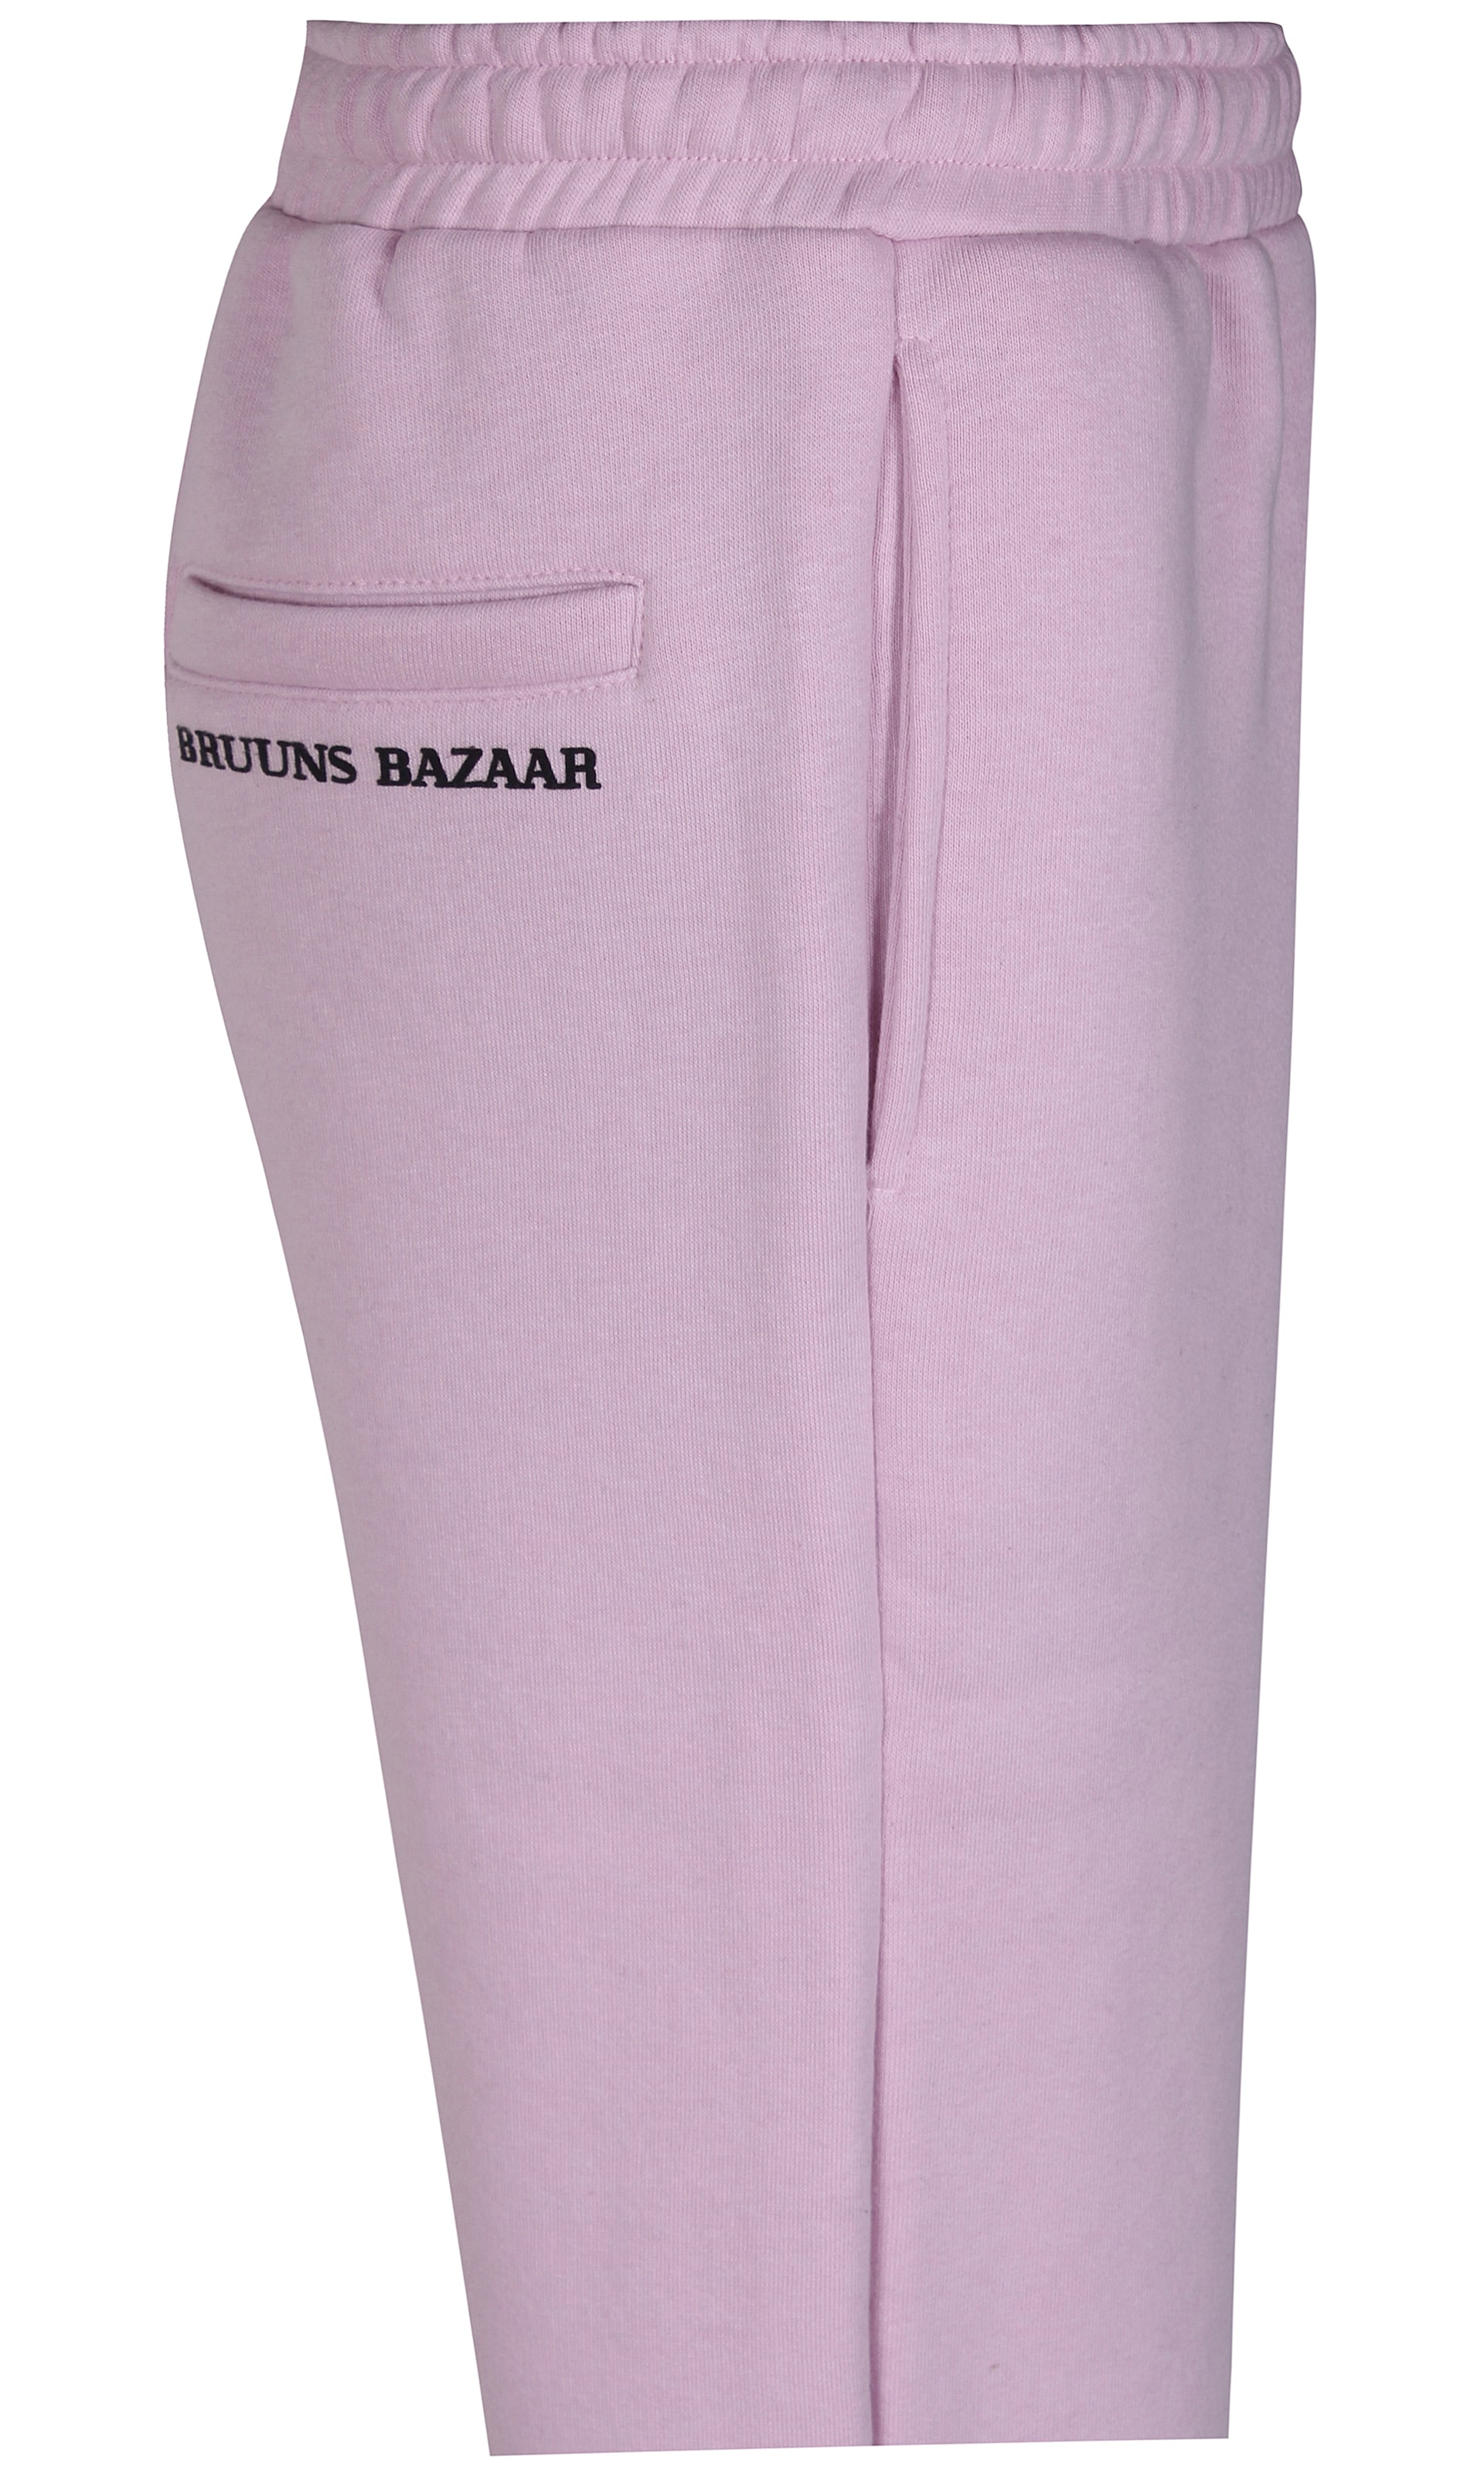 Bruuns Bazaar Kids Pantalon 128 Violet